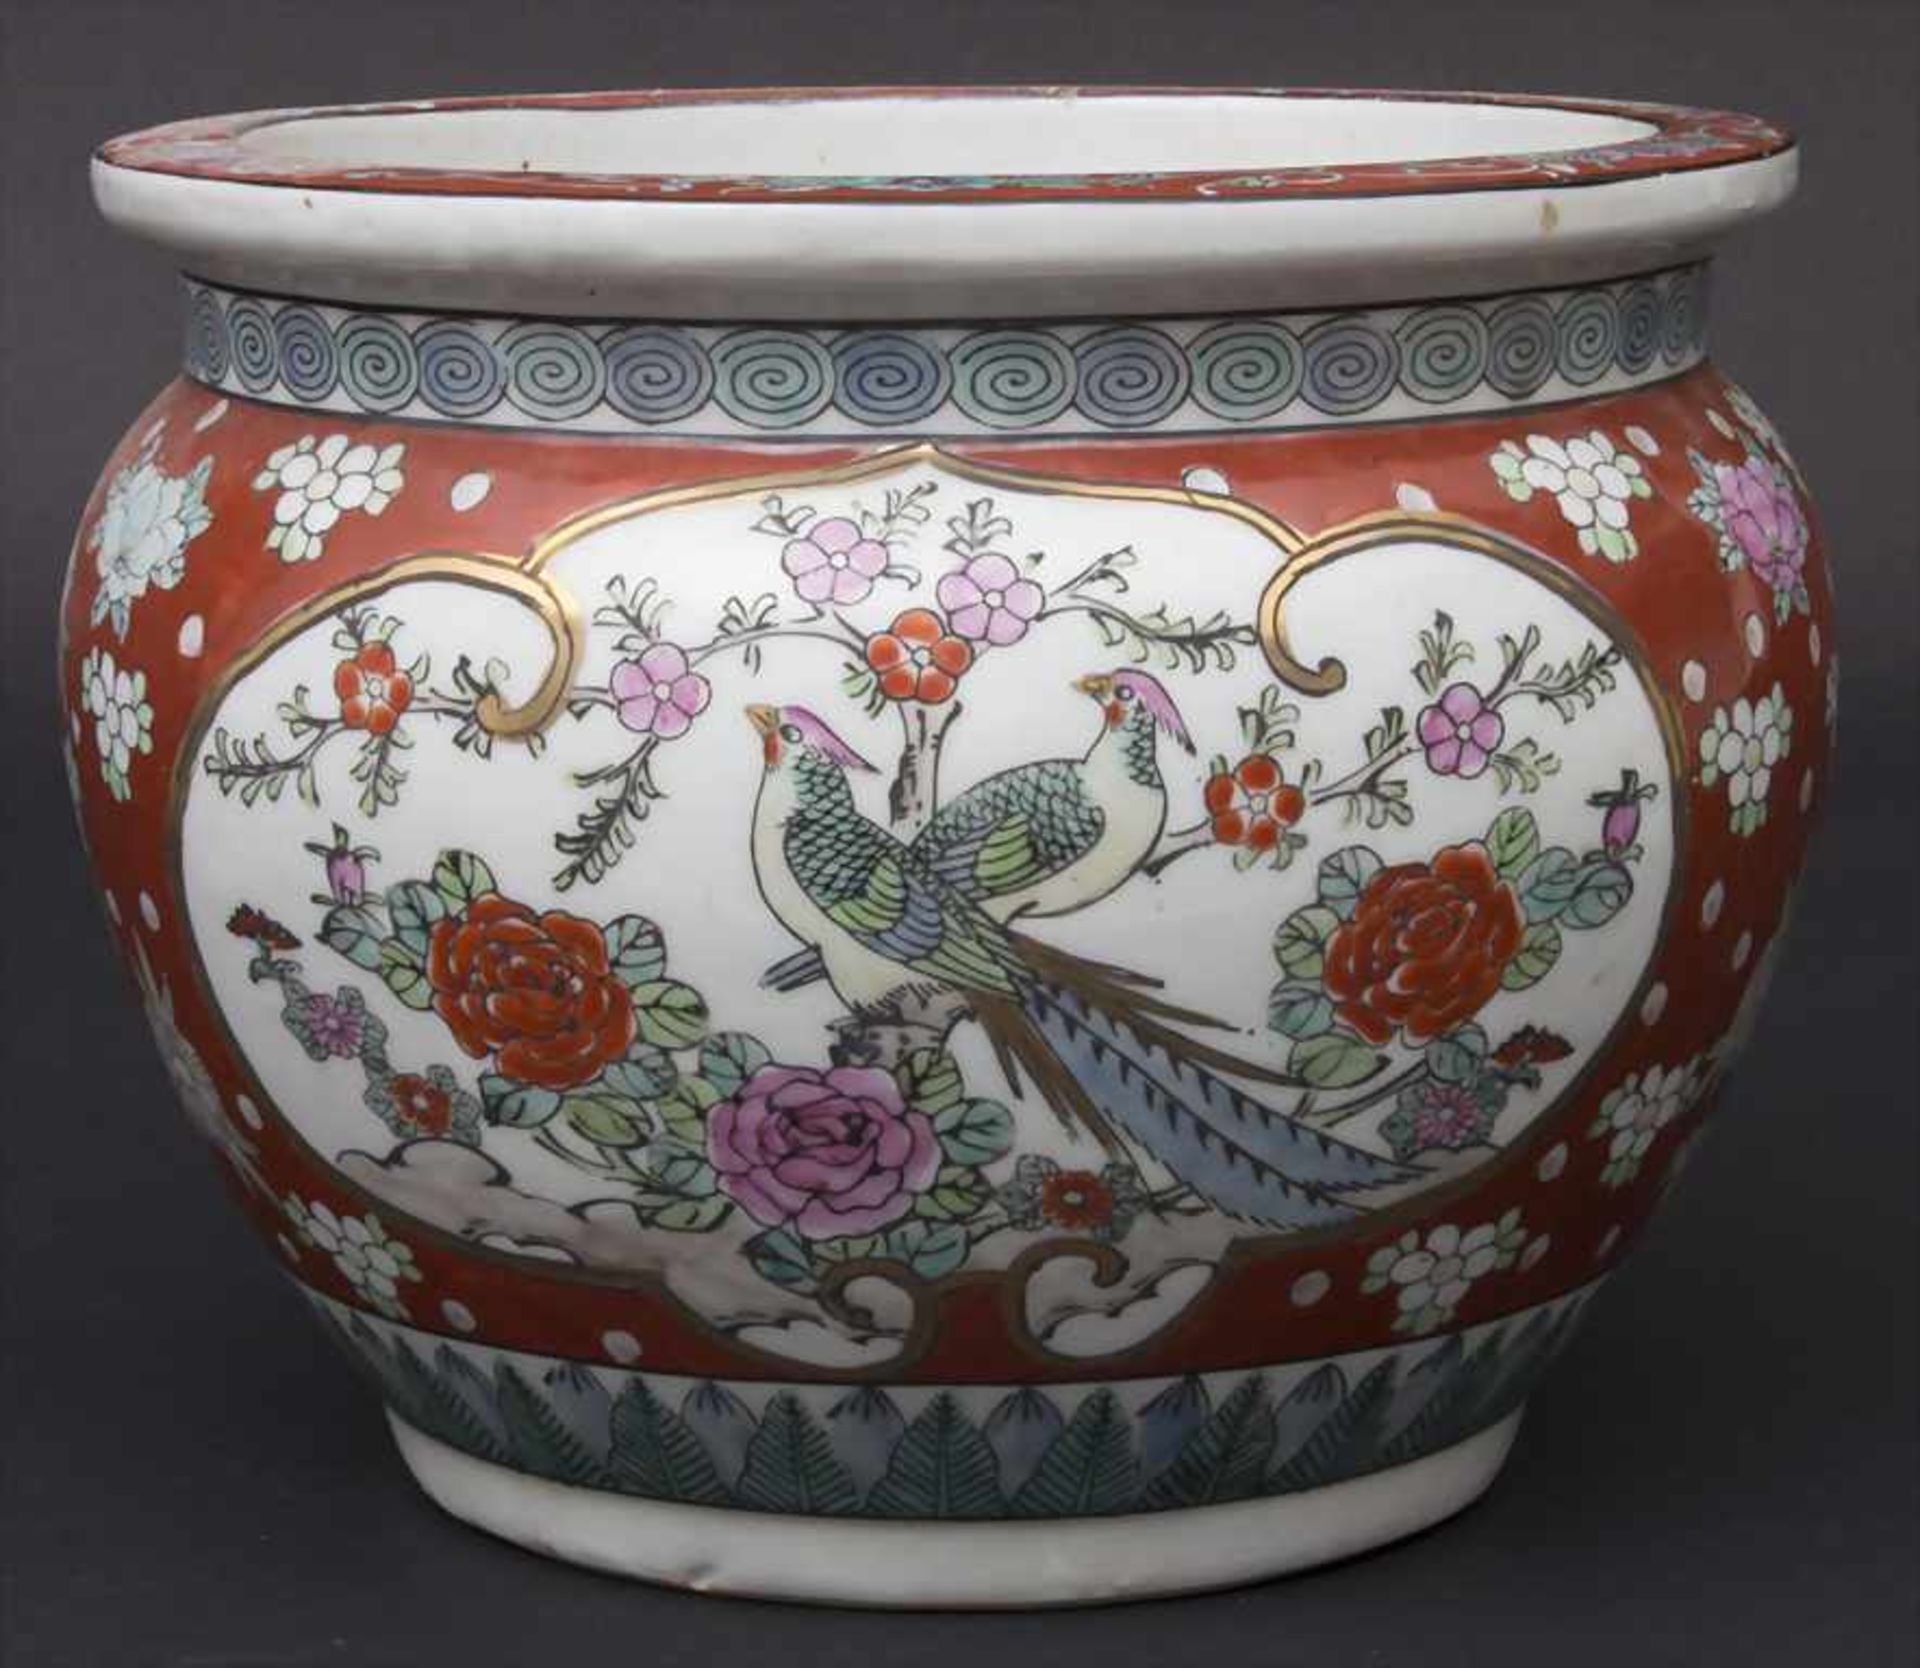 Cachepot mit Vogel-Blütendekor / A cachepot with birds and flowers, Japan, 20. Jh.Material: